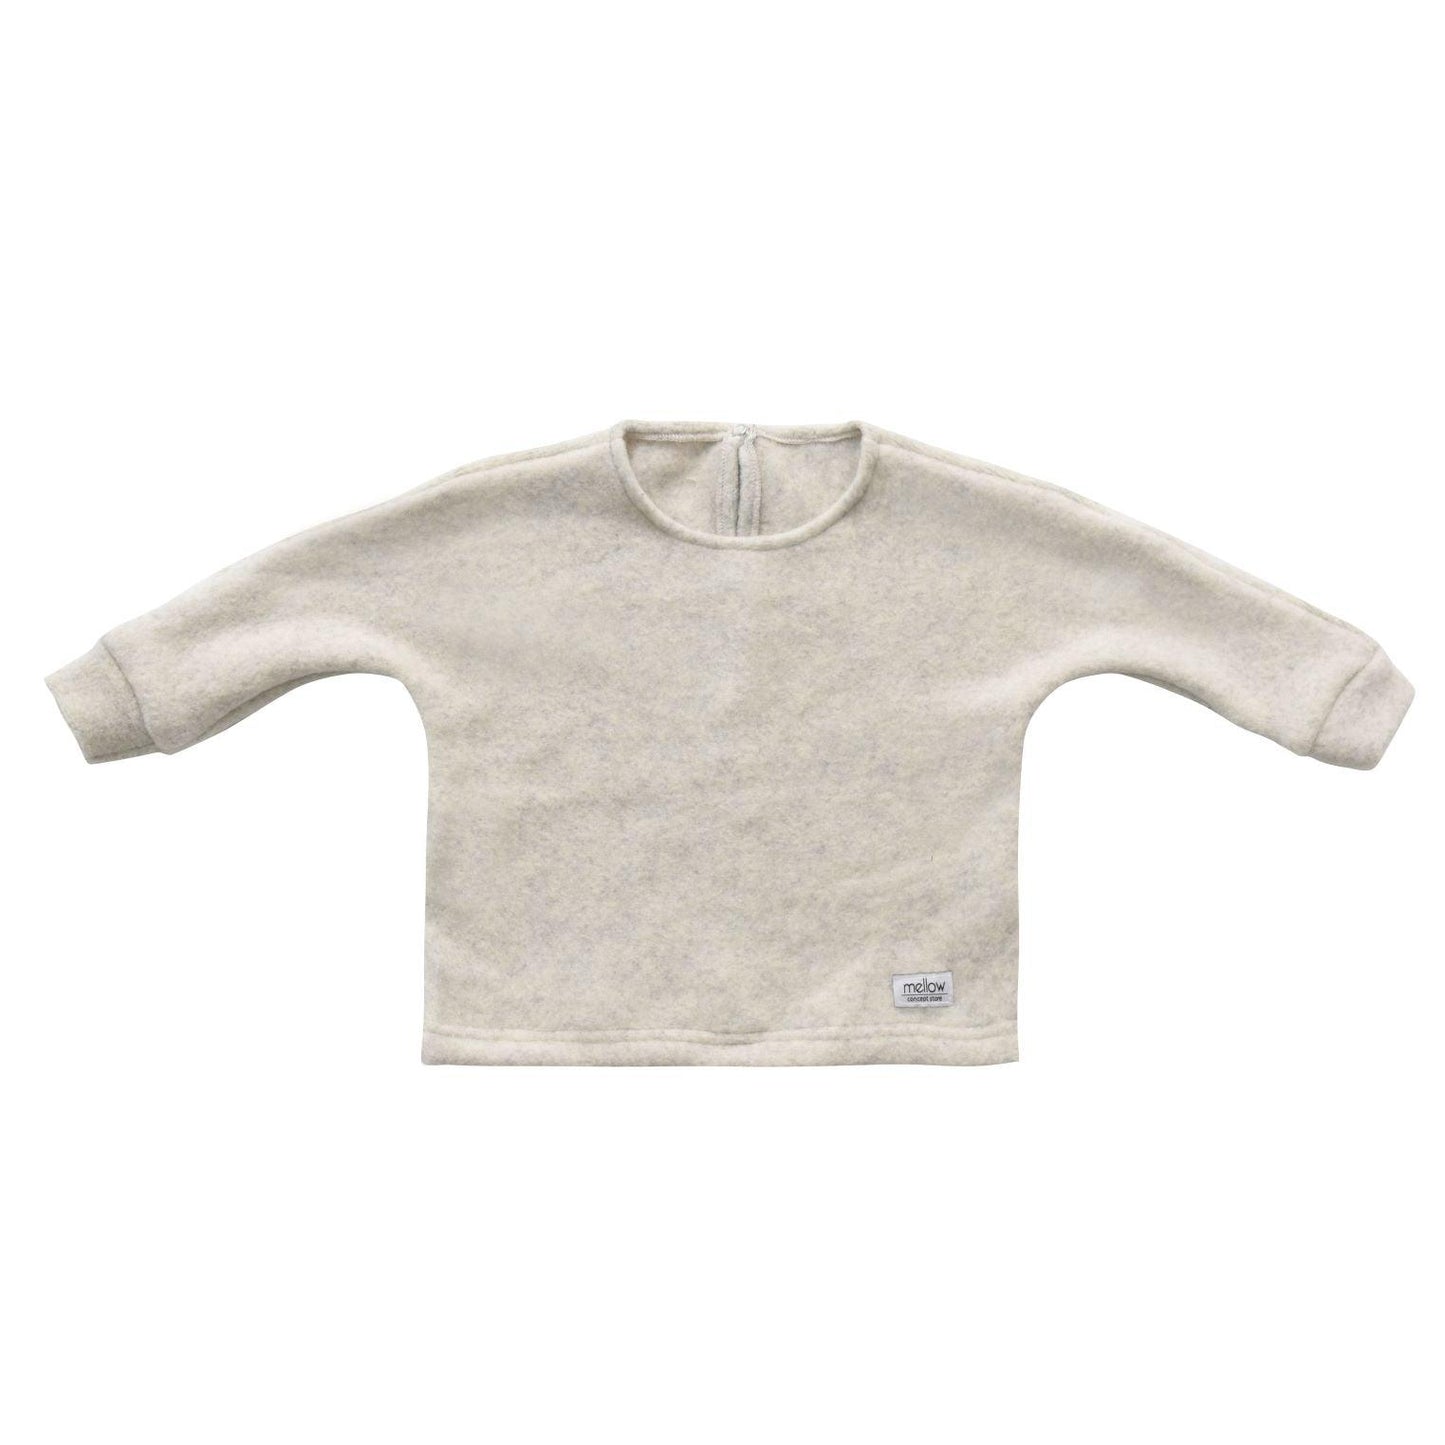 Woolen Baby/Kid Clothing Set - Grey